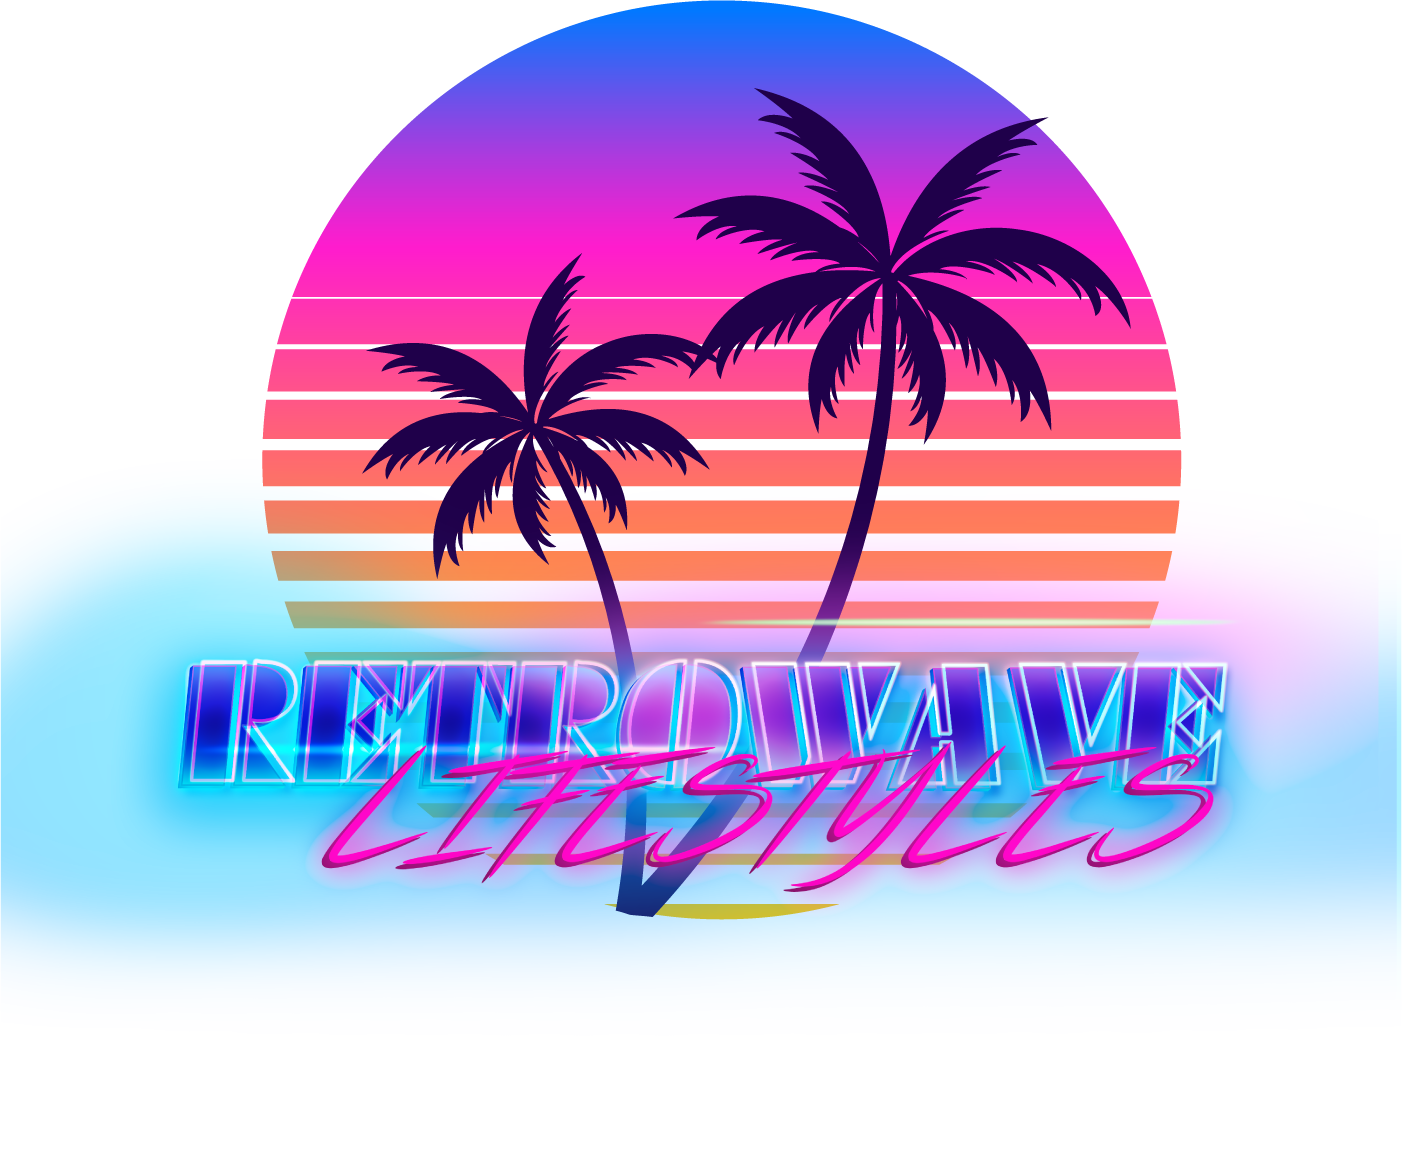 Retrowave_lifestyles